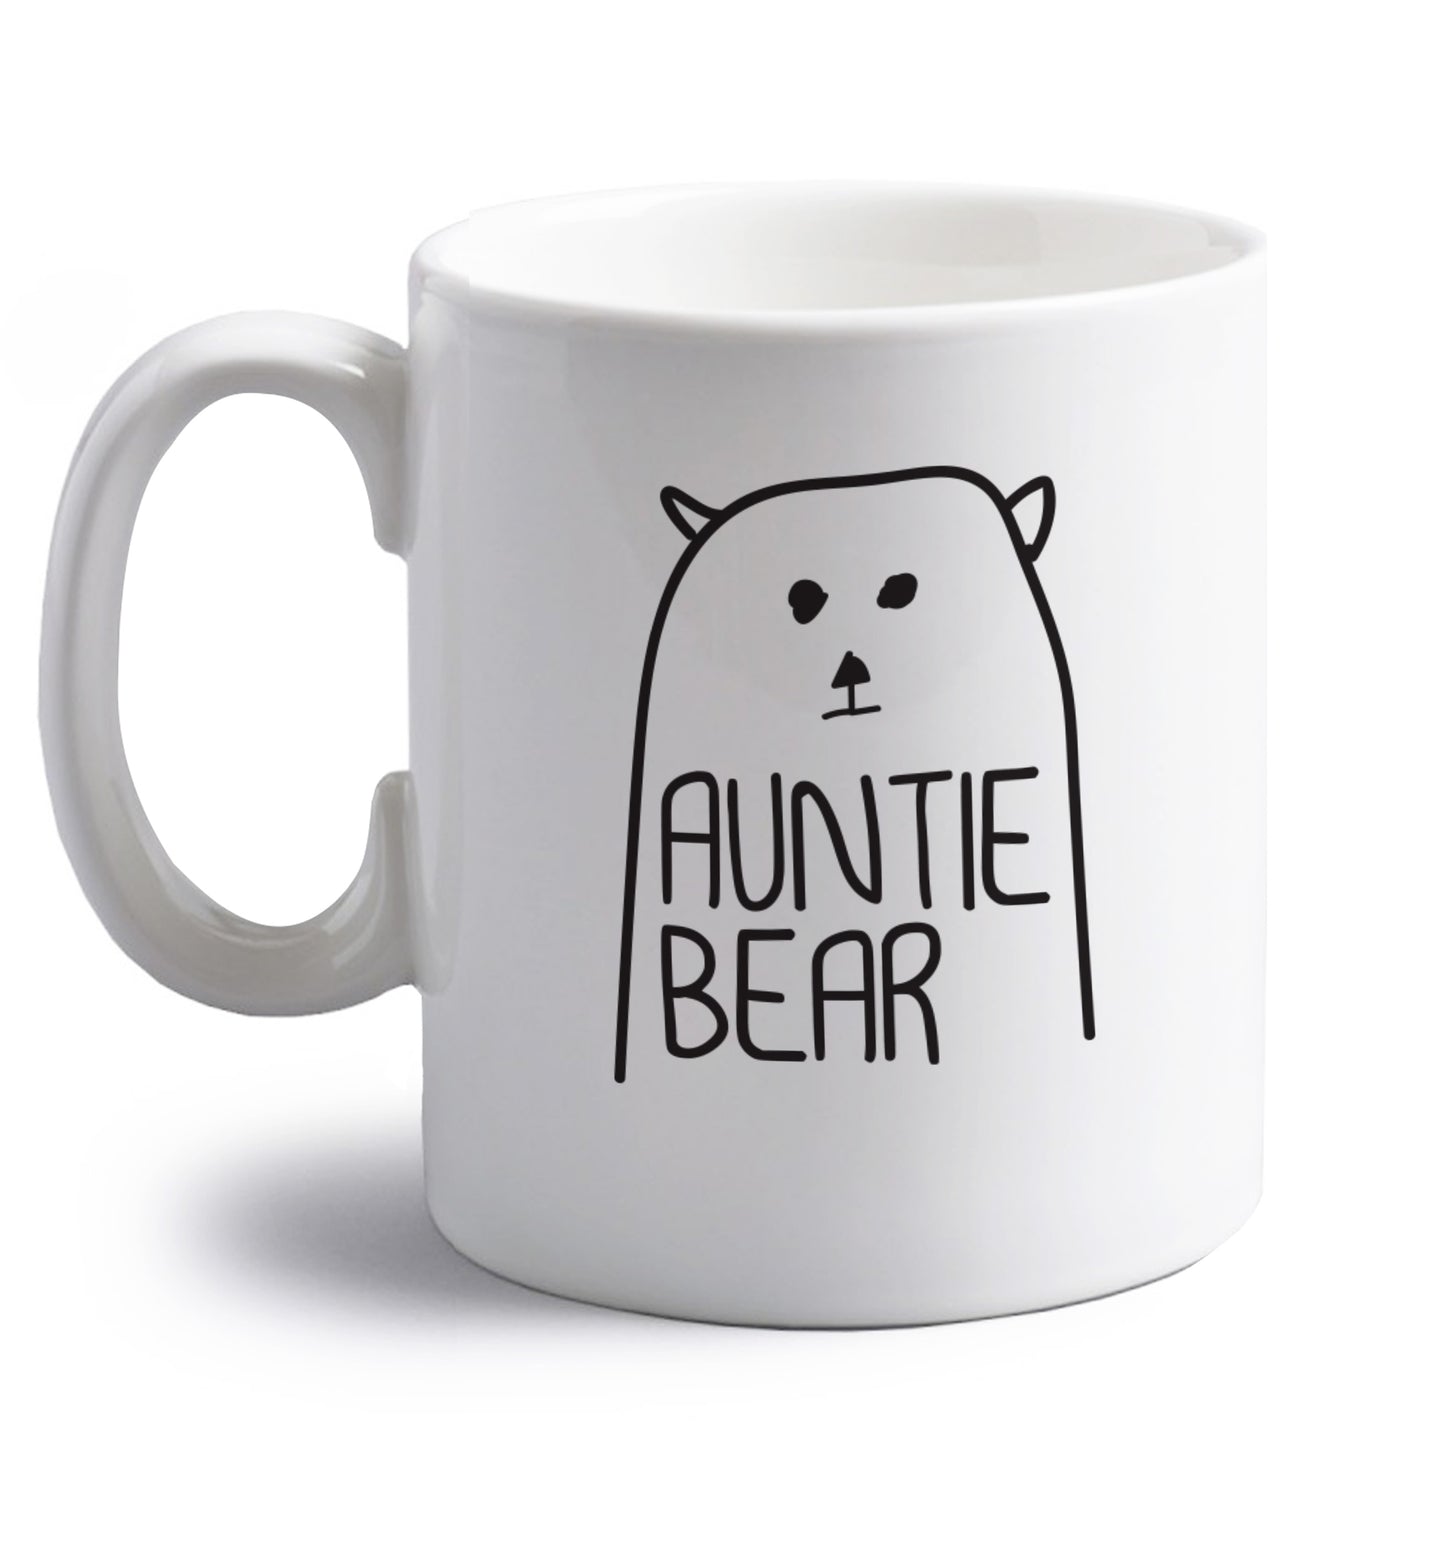 Auntie bear right handed white ceramic mug 